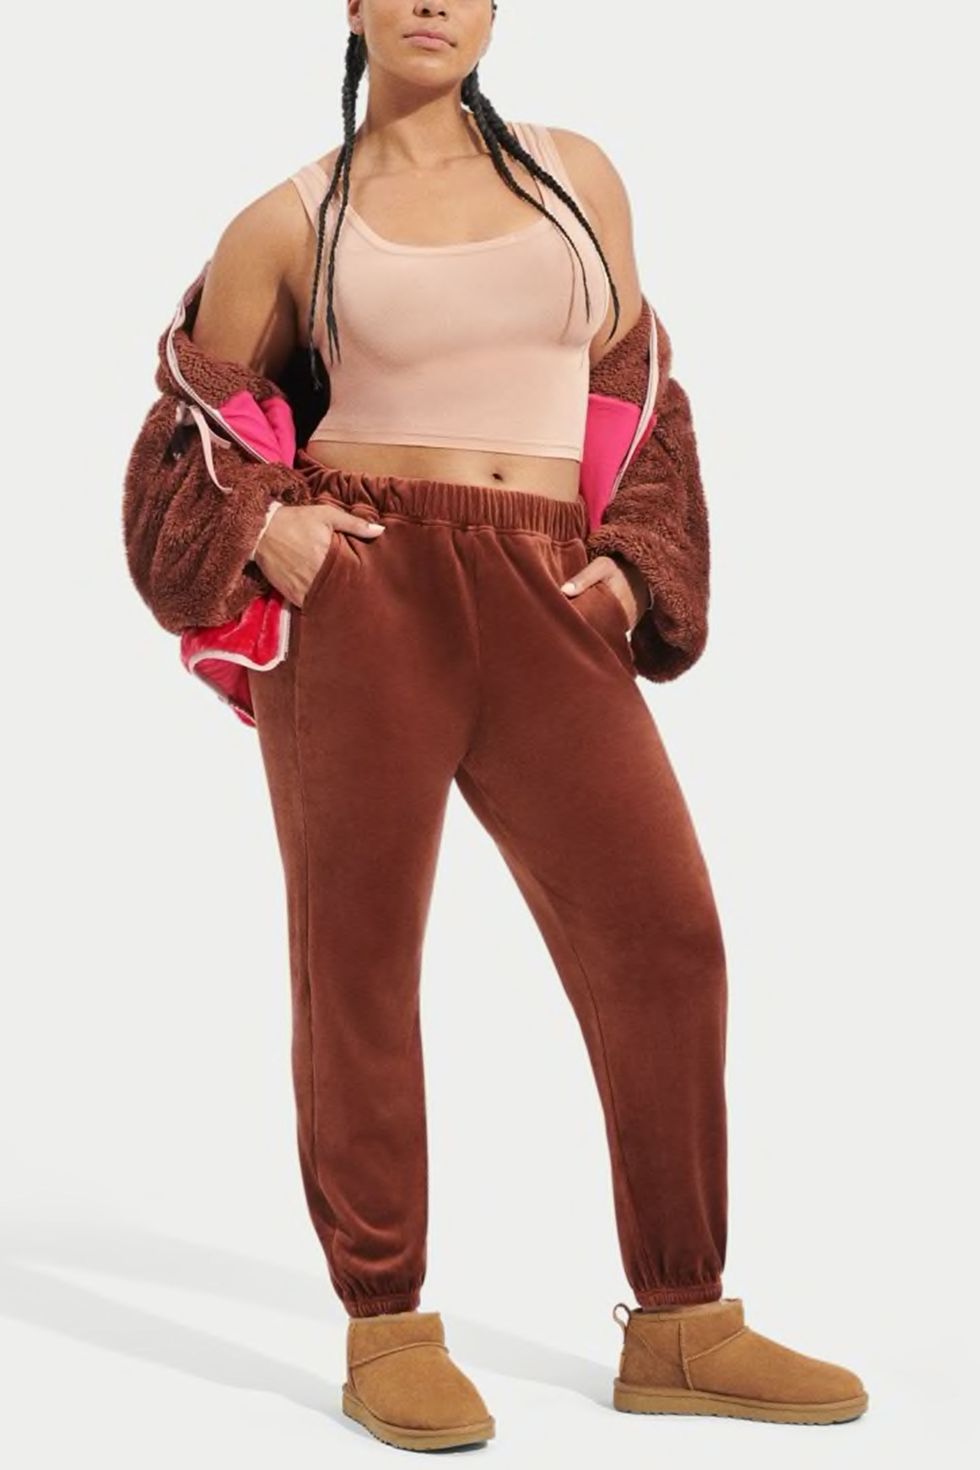 UGG Jogger Pants Women's Size Medium Casual Pink Fleece Lined Sweatpants